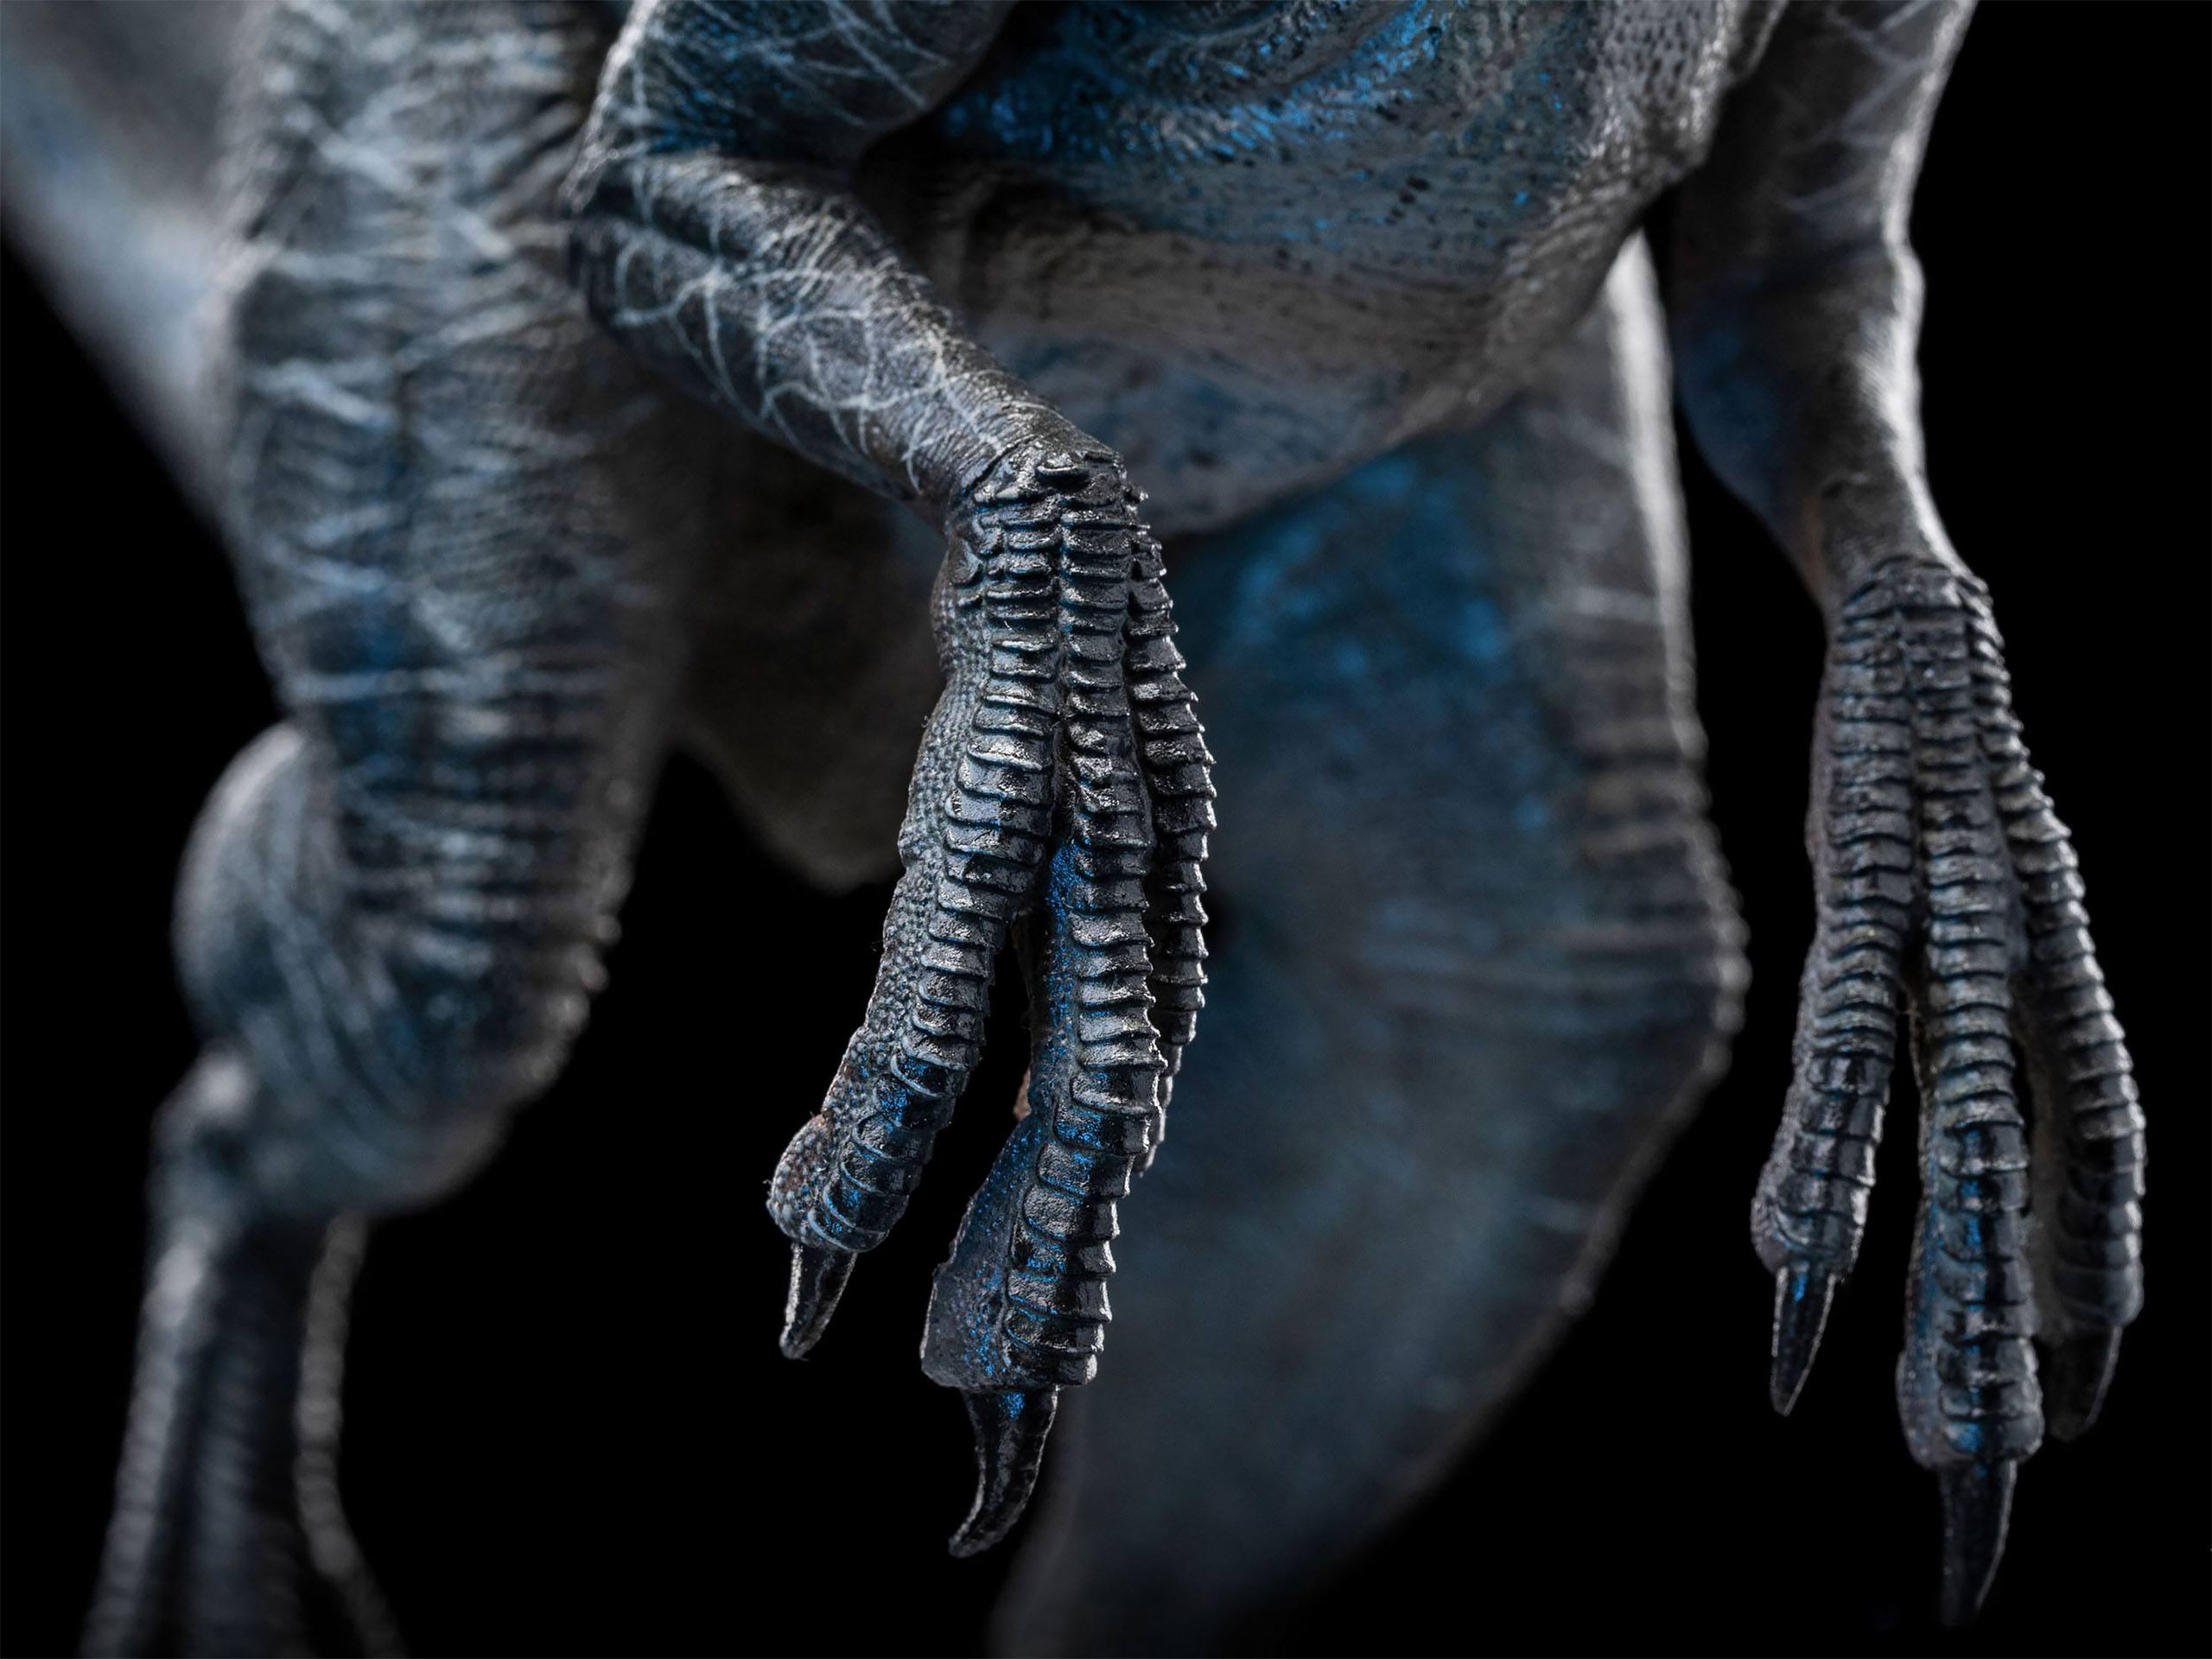 Jurassic World - Blue Art Scale Deluxe Statue